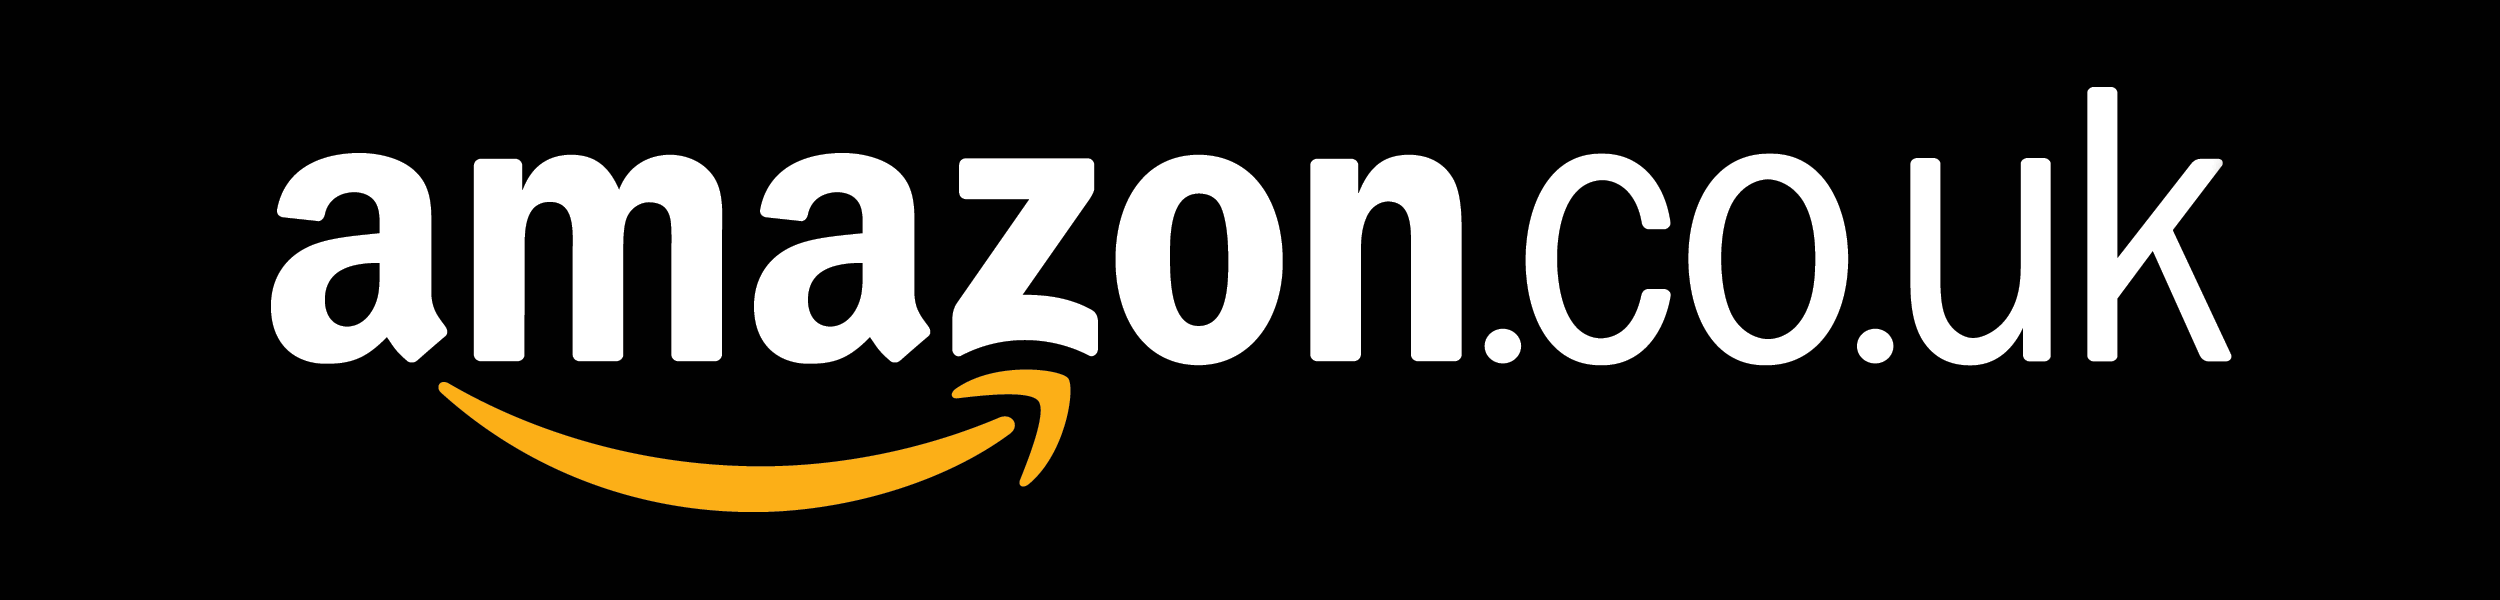 Amazon.co.uk Logo - amazon co uk logo png - AbeonCliparts | Cliparts & Vectors